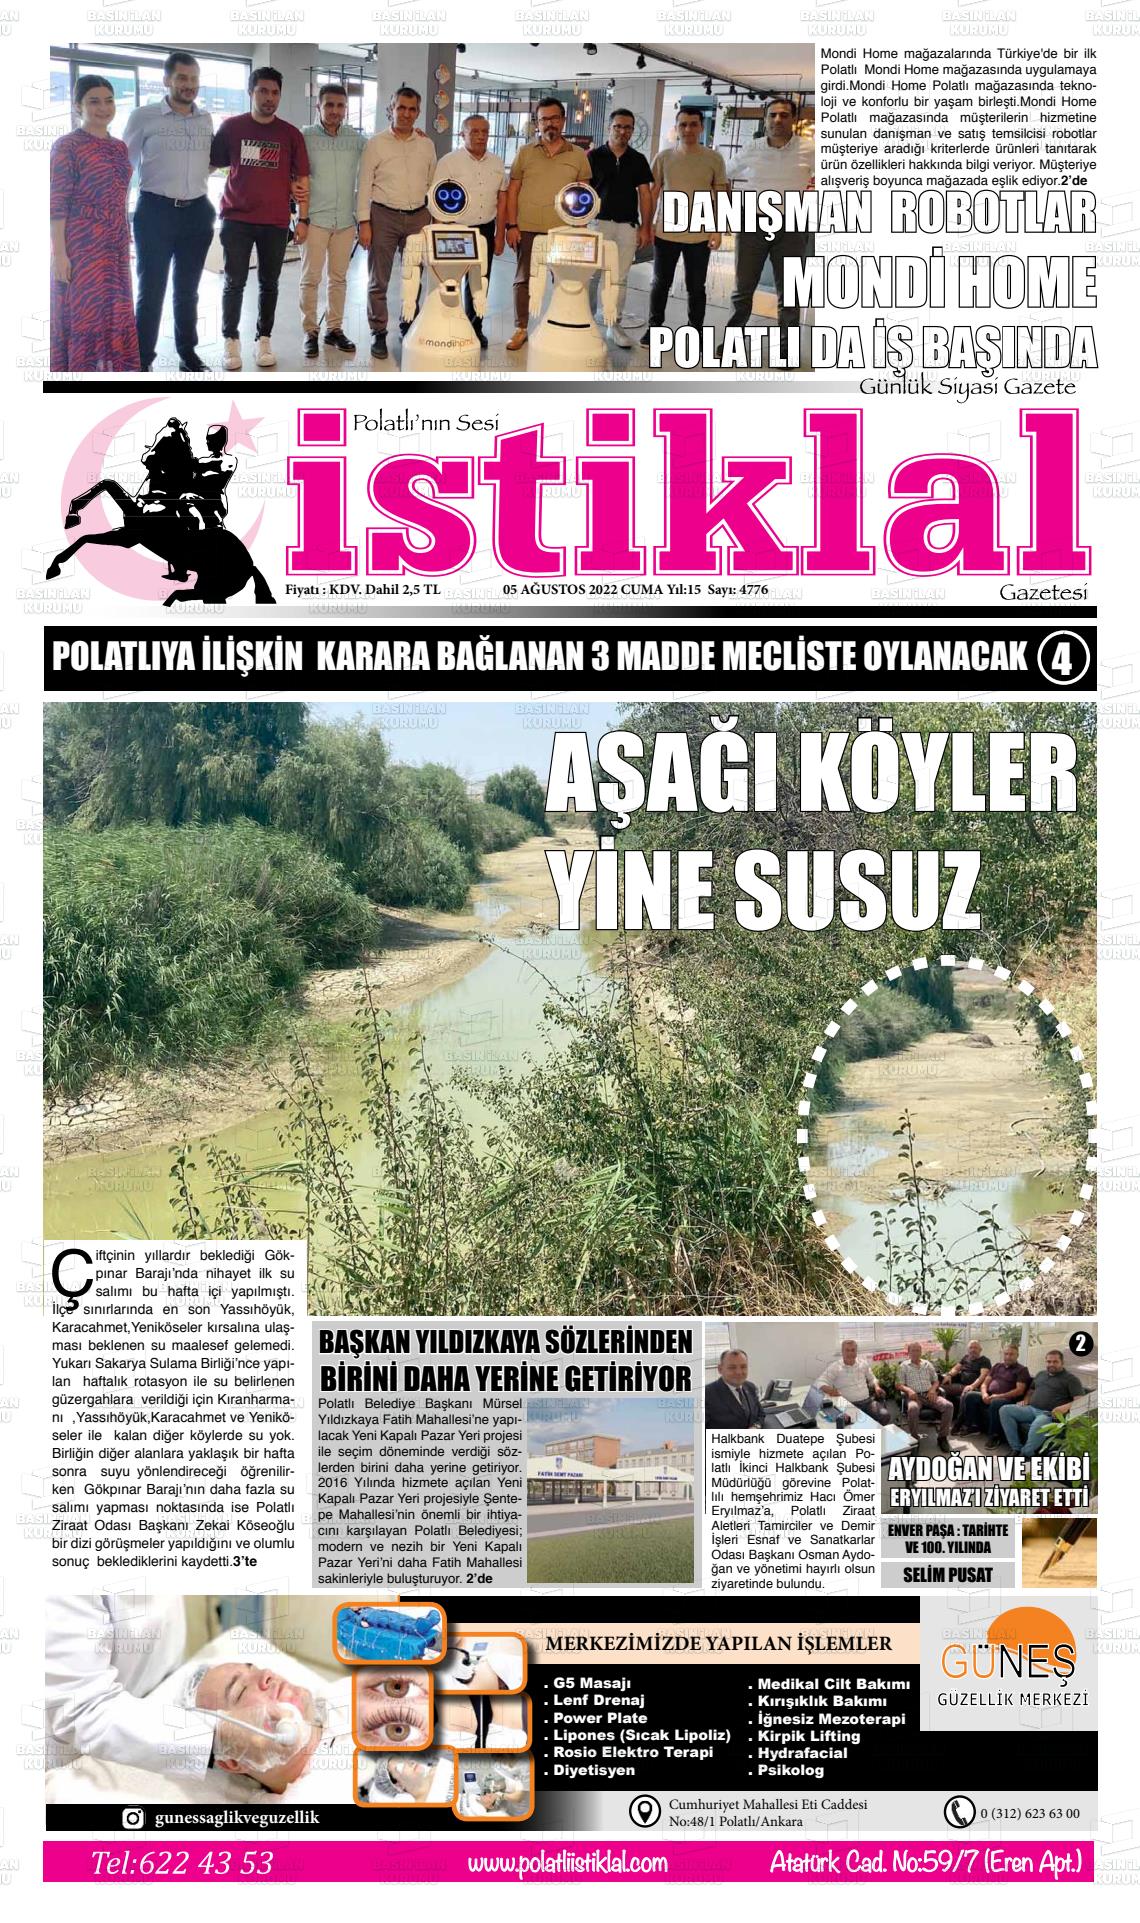 05 Ağustos 2022 Polatlı İstiklal Gazete Manşeti